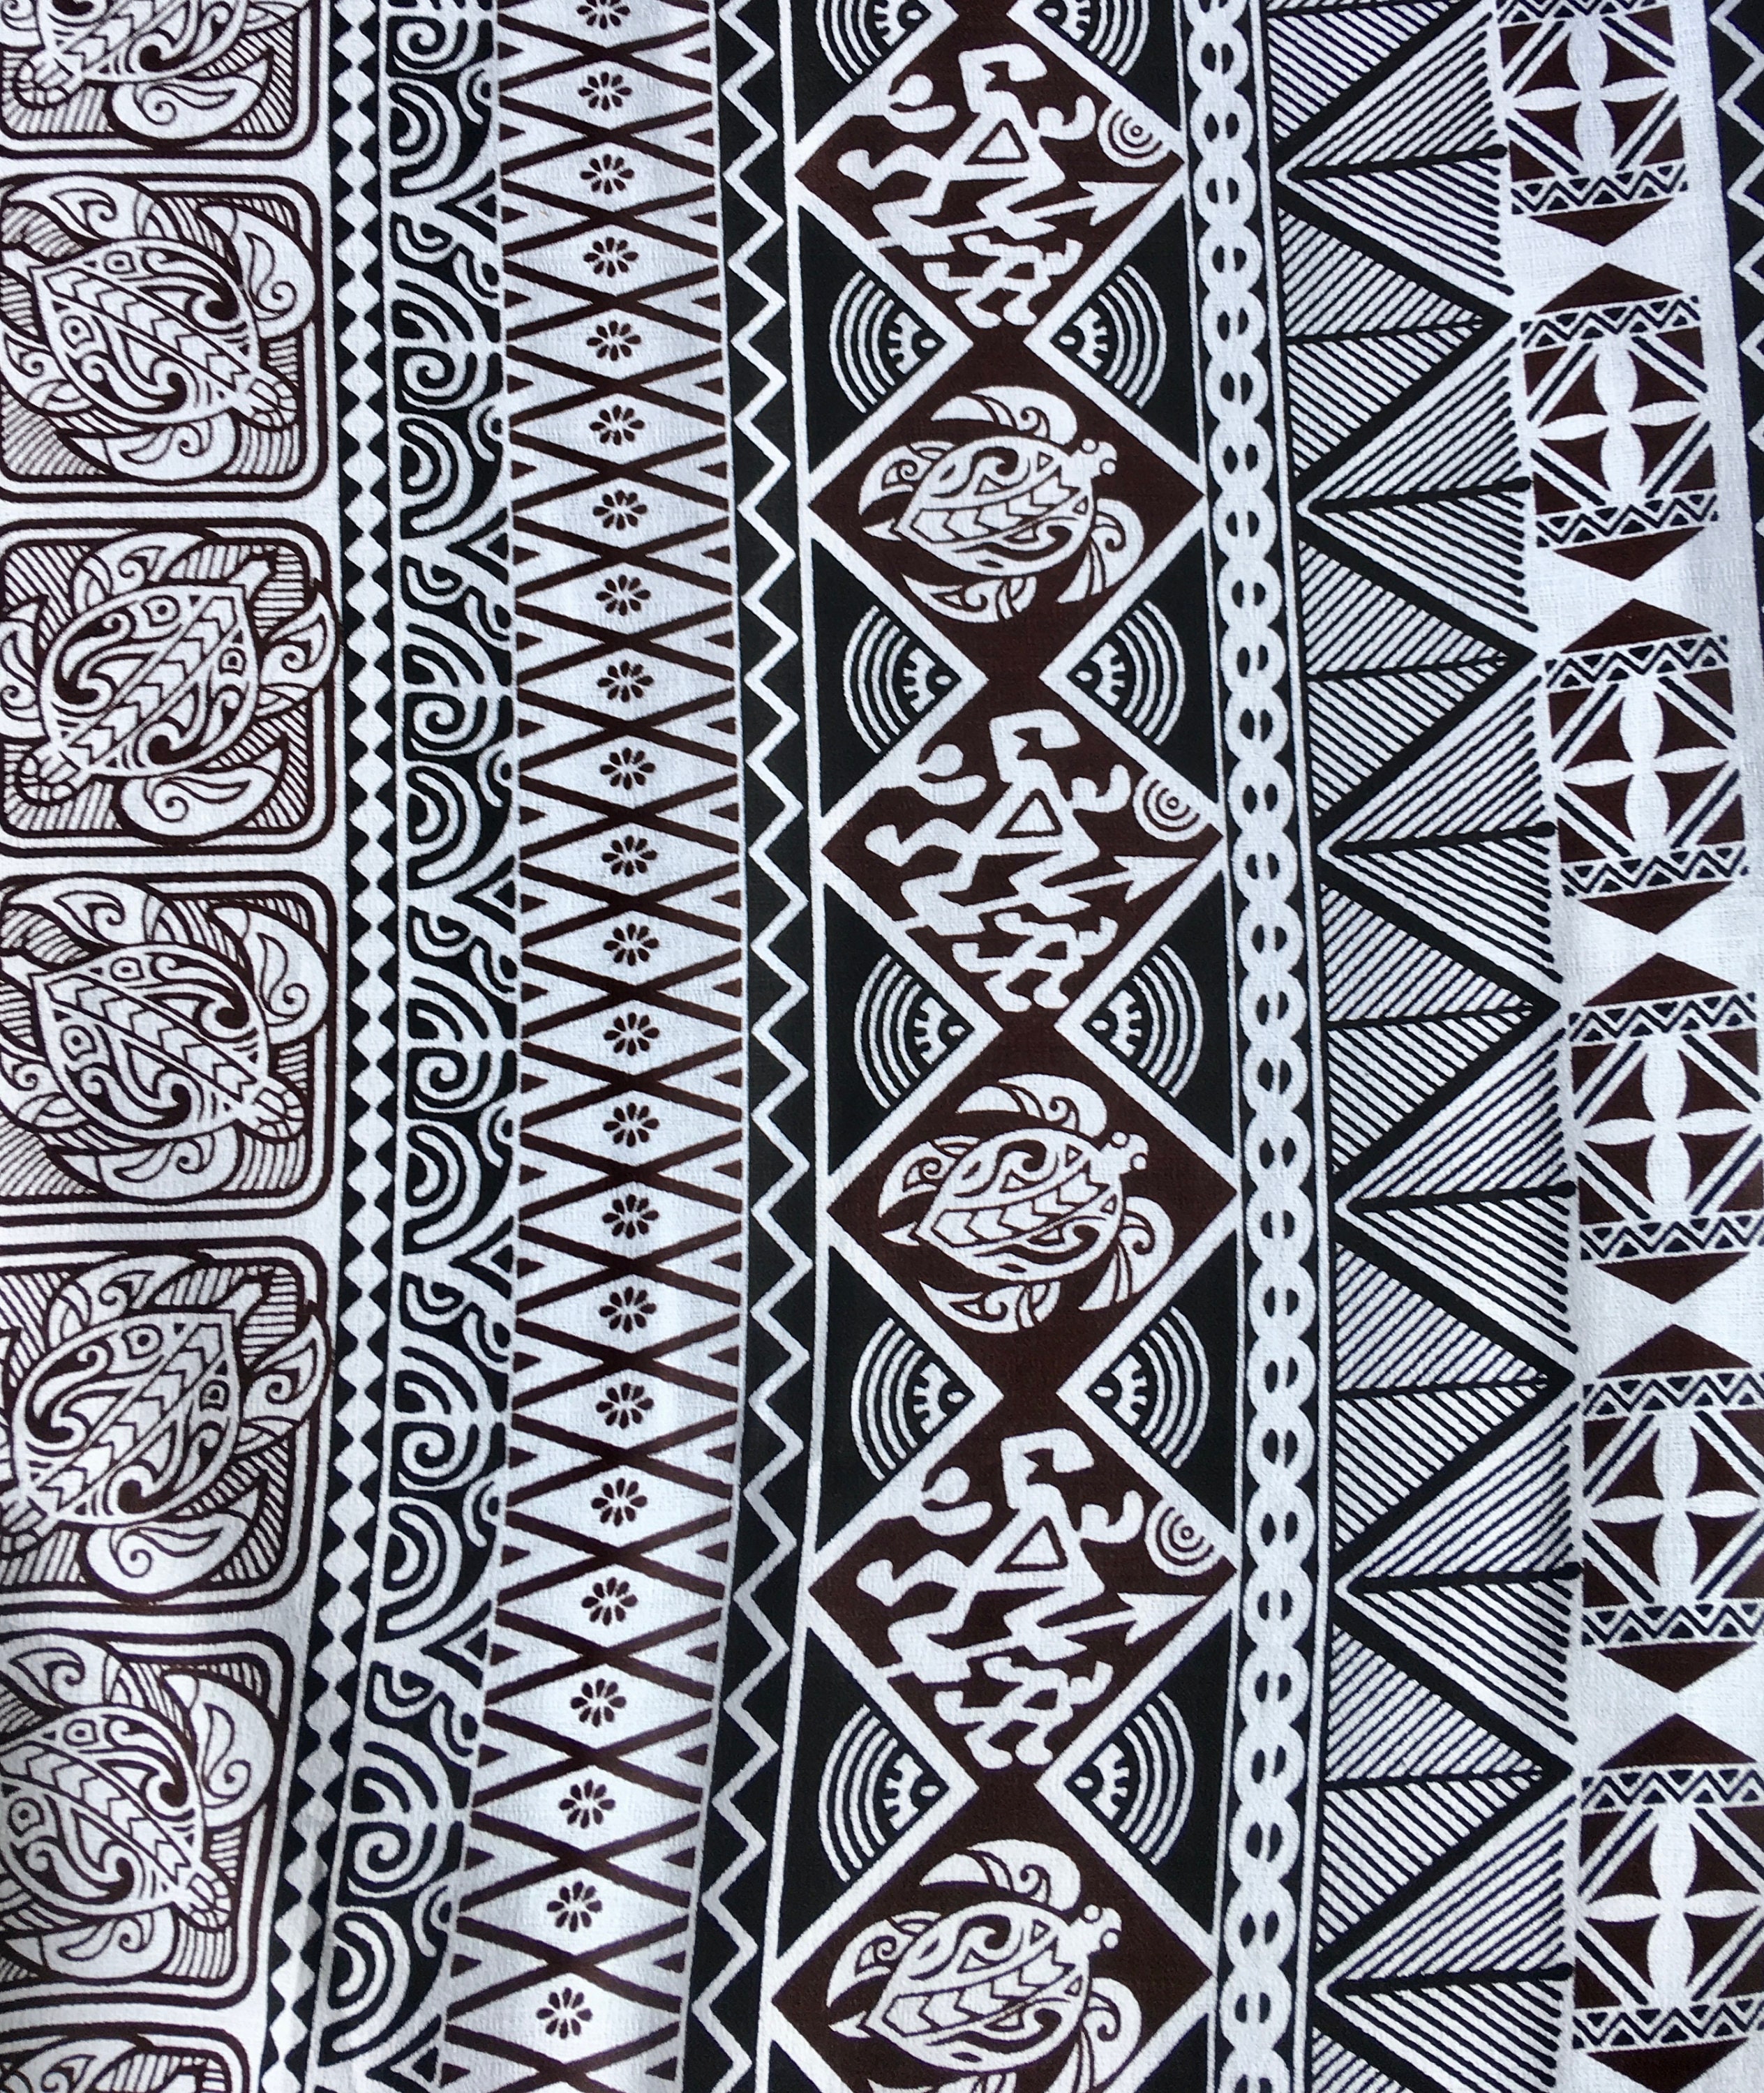  Polynesian  fabric fabric motifs  Tapa white Brown and Black 